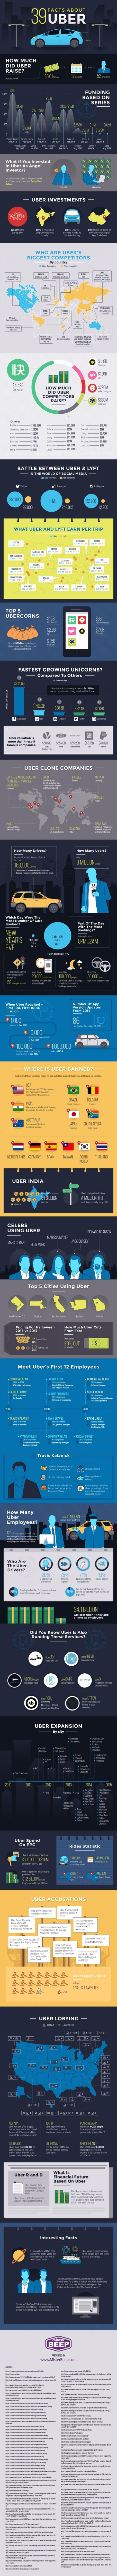 Infographic: Uber's evolution